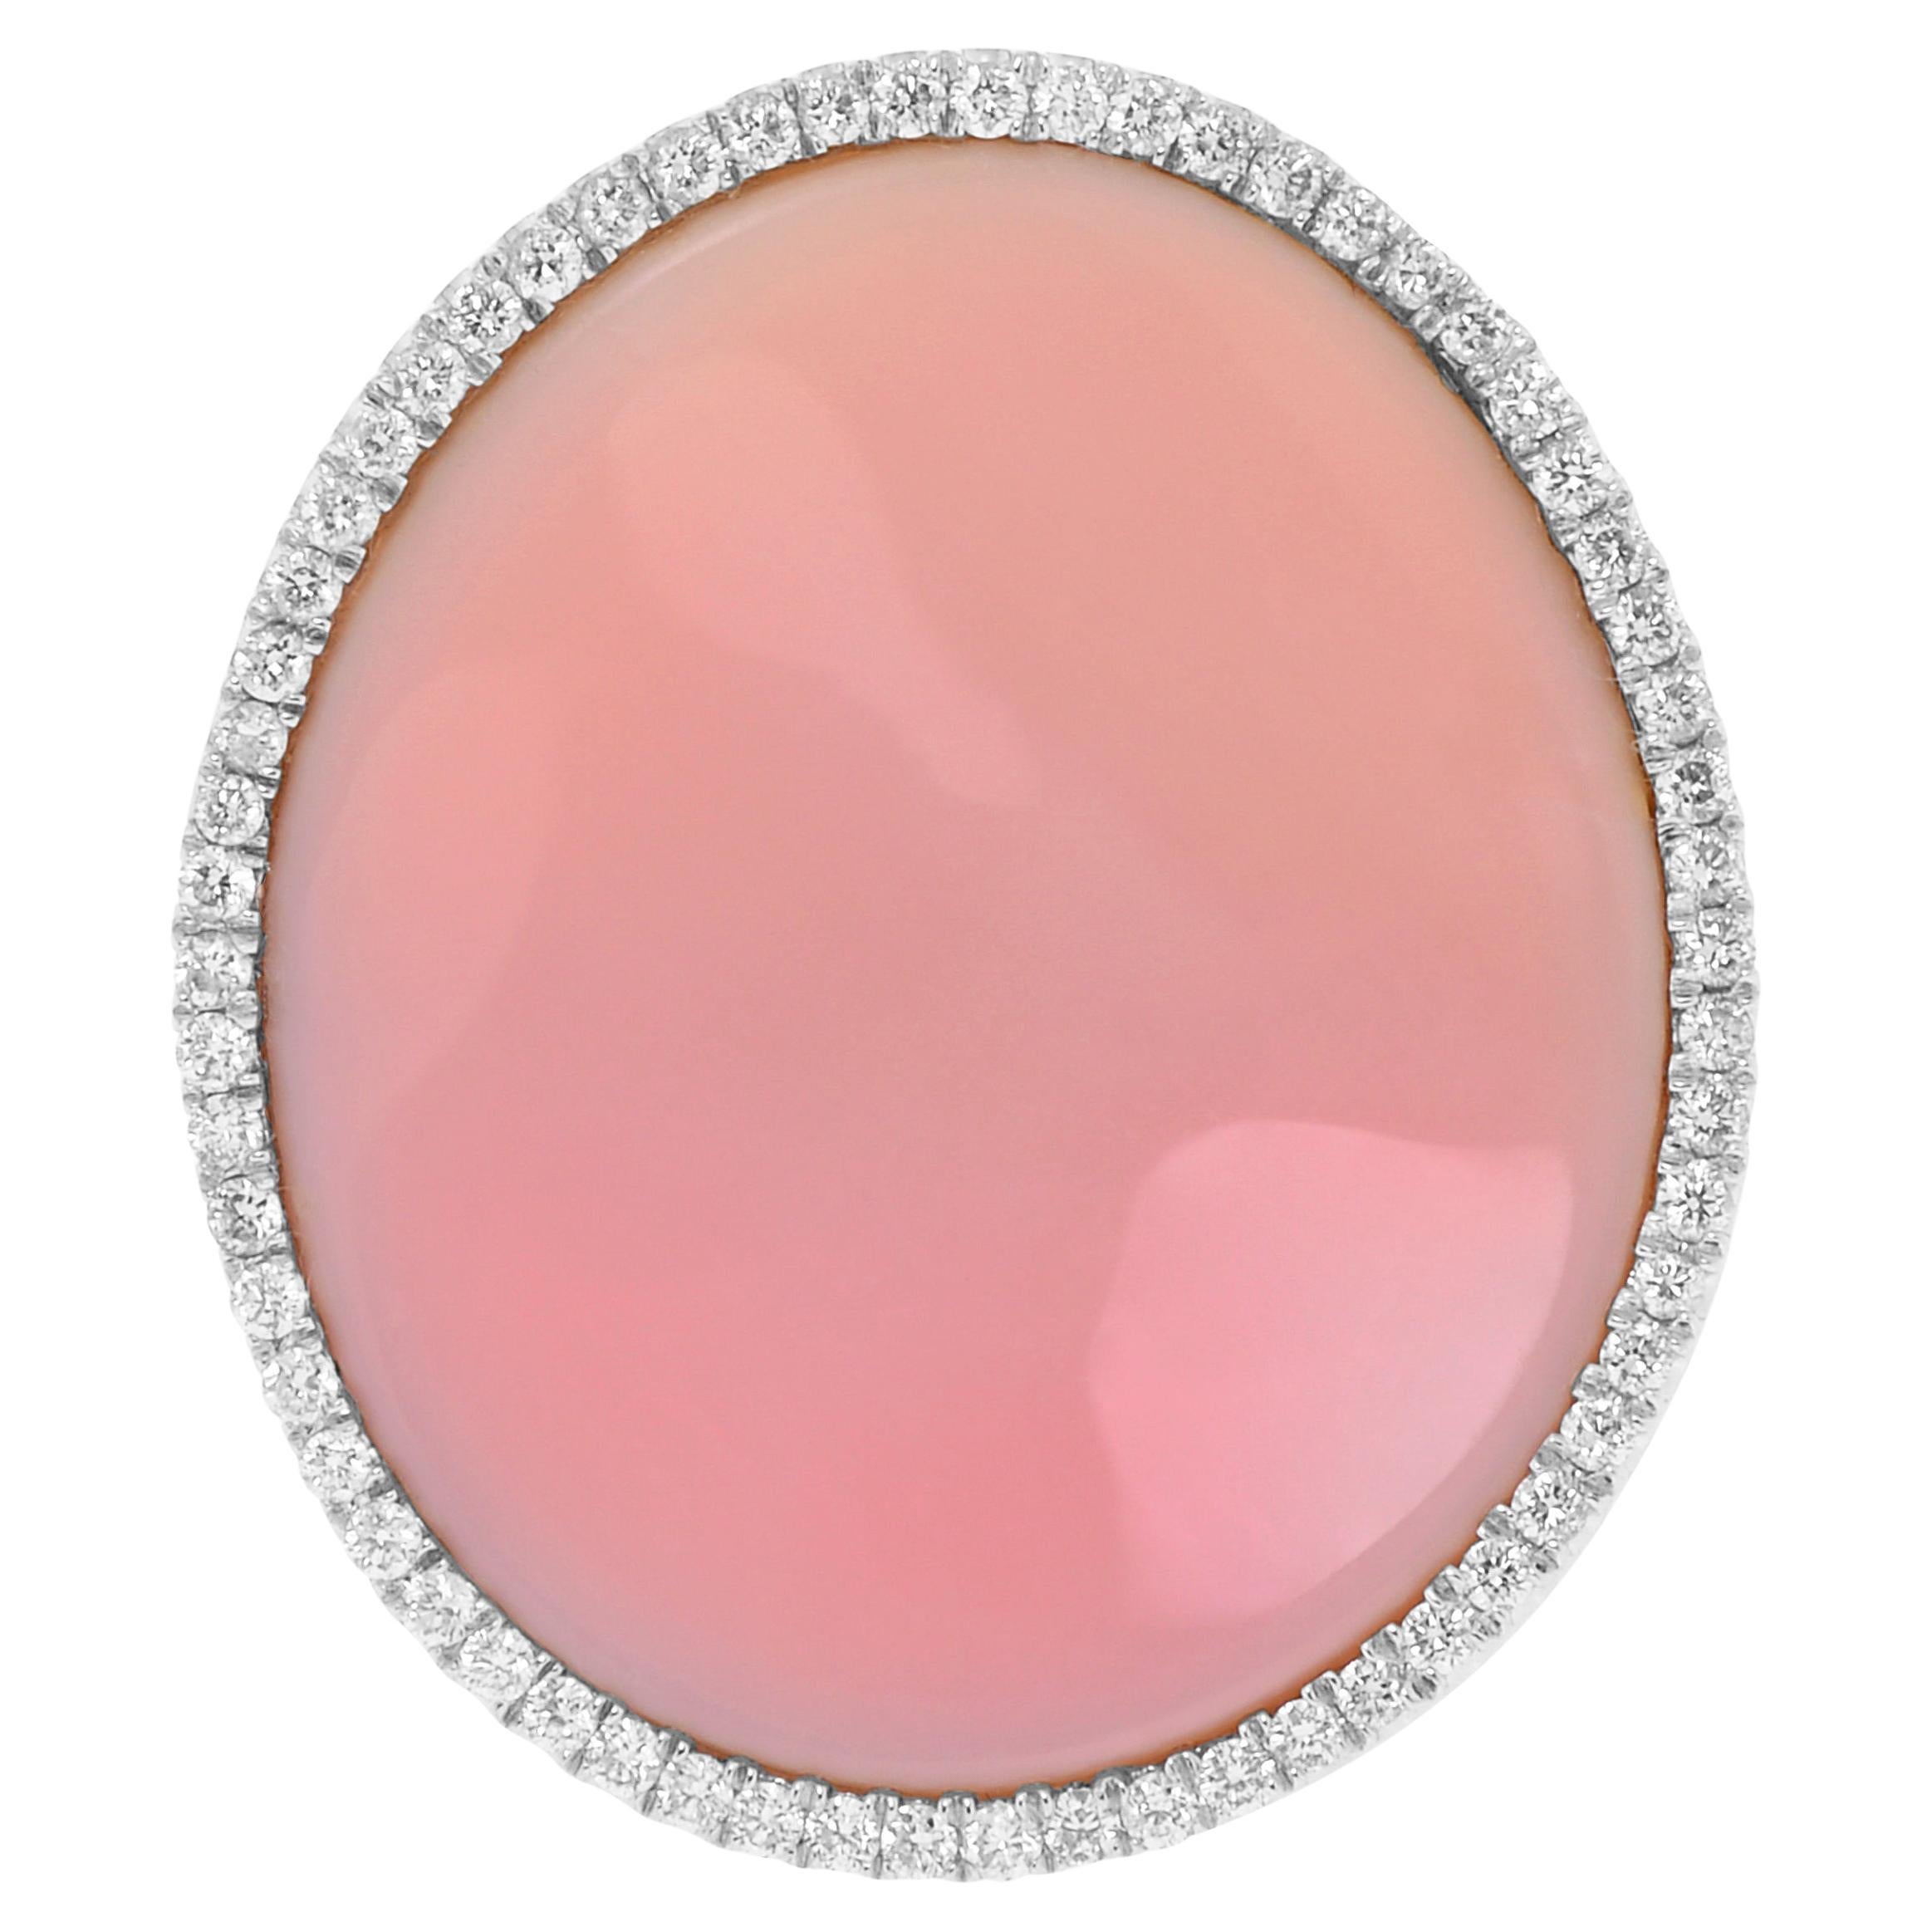 Mimi Milano Aurora 18K White Gold, Mother of Pearl & Diamond Statement Ring sz 6 For Sale